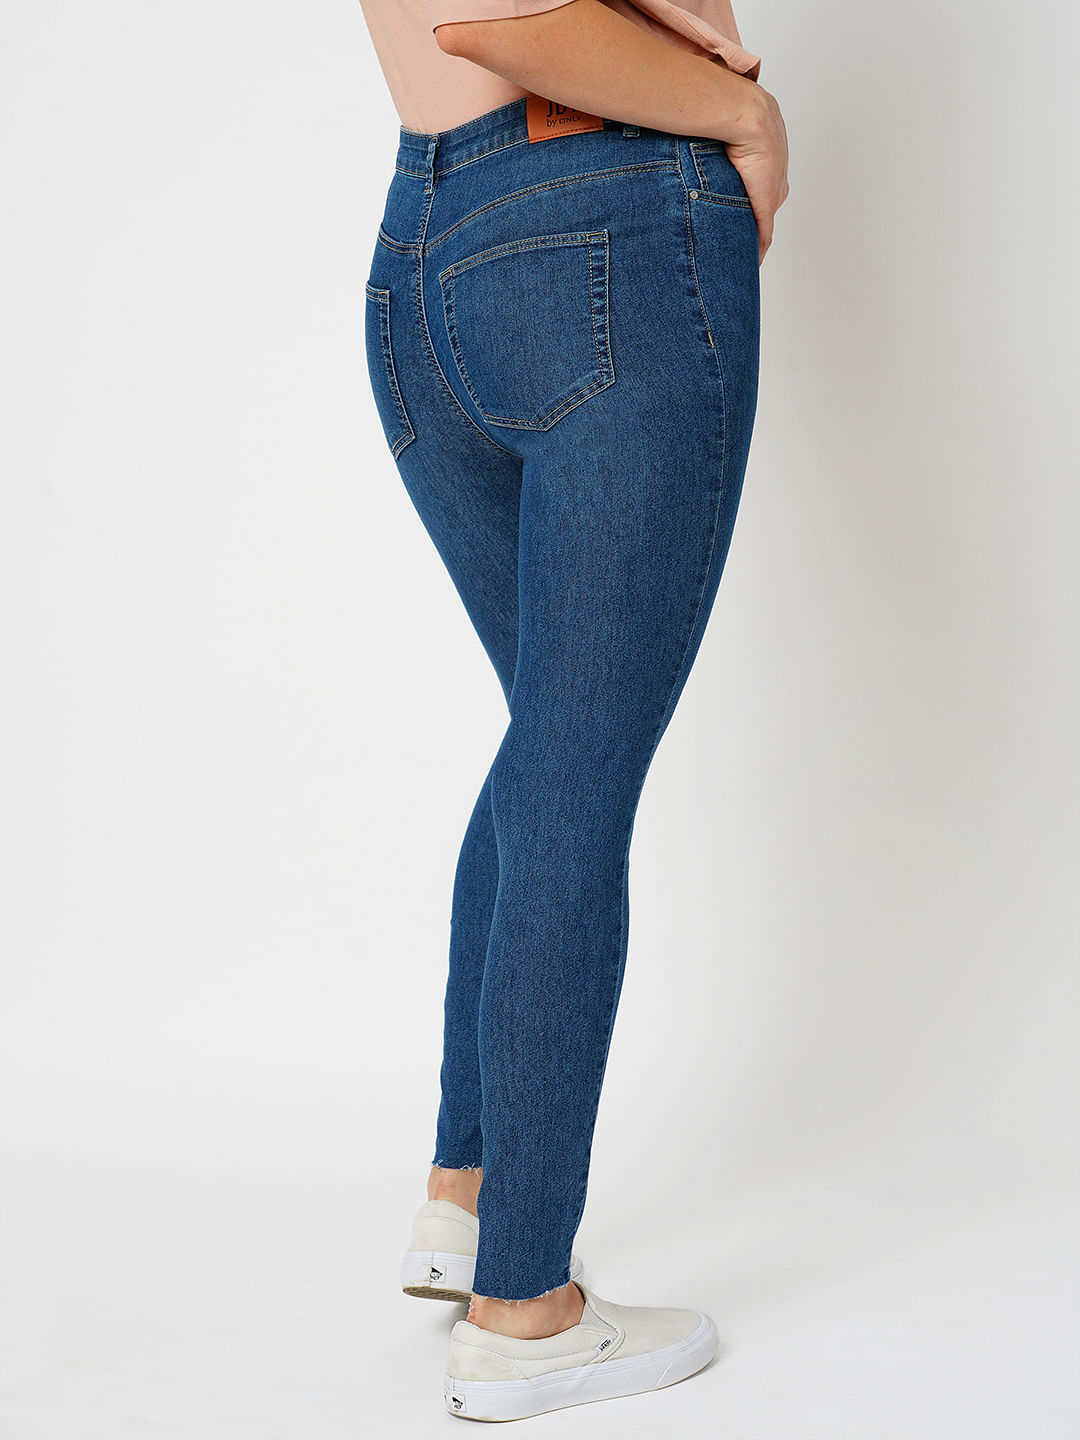 Giselle women's jeans super skinny fit mid waist ankle length blue – CROSS  JEANS